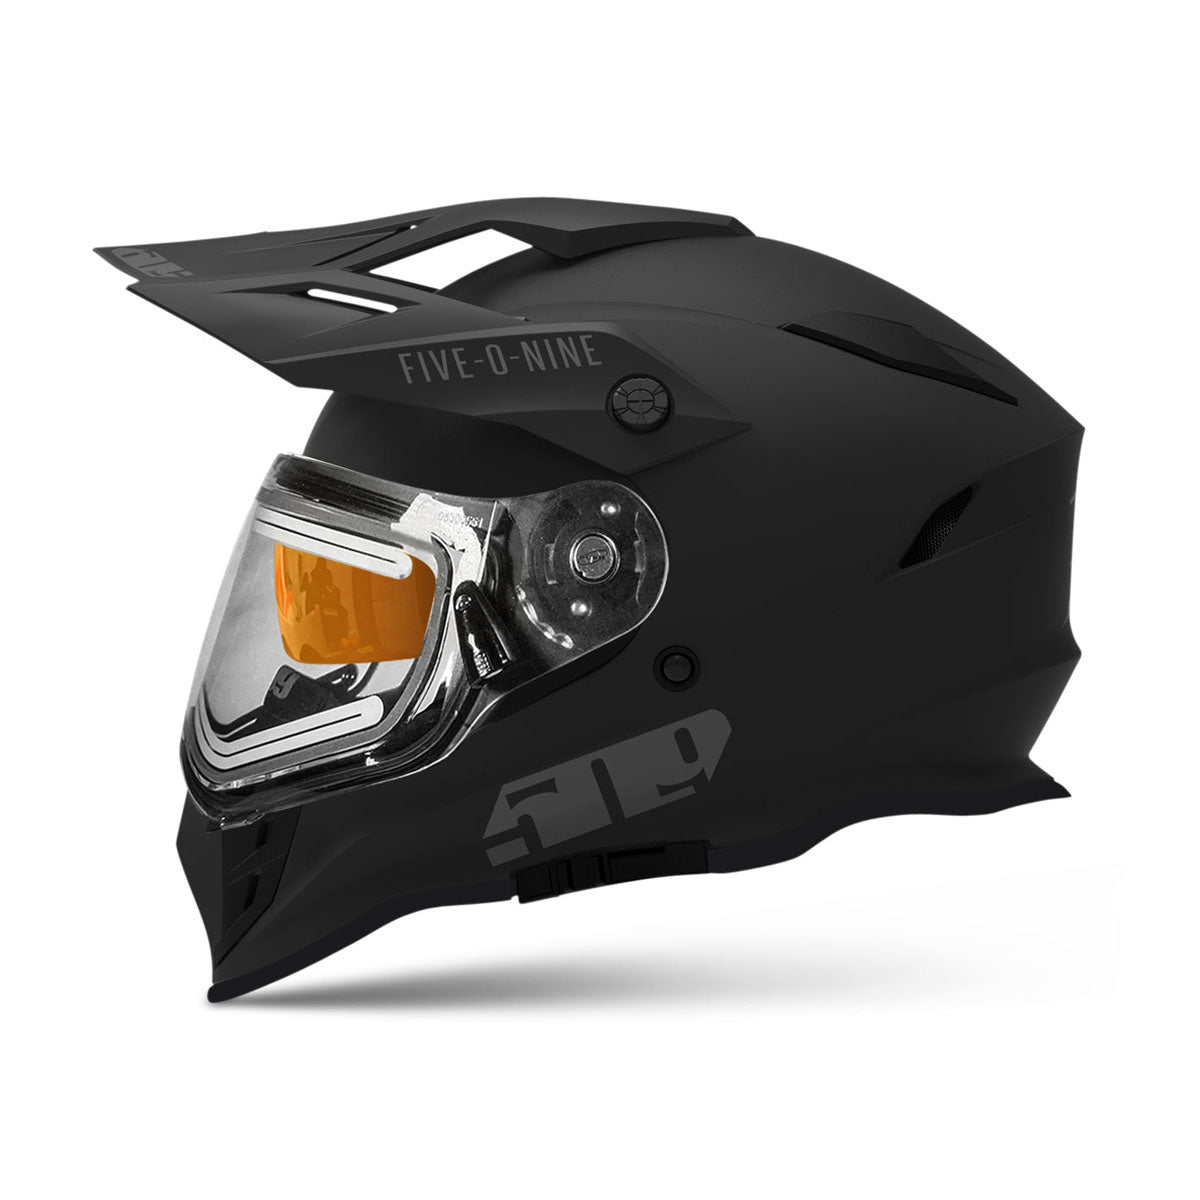 Delta R3L Ignite Helmet